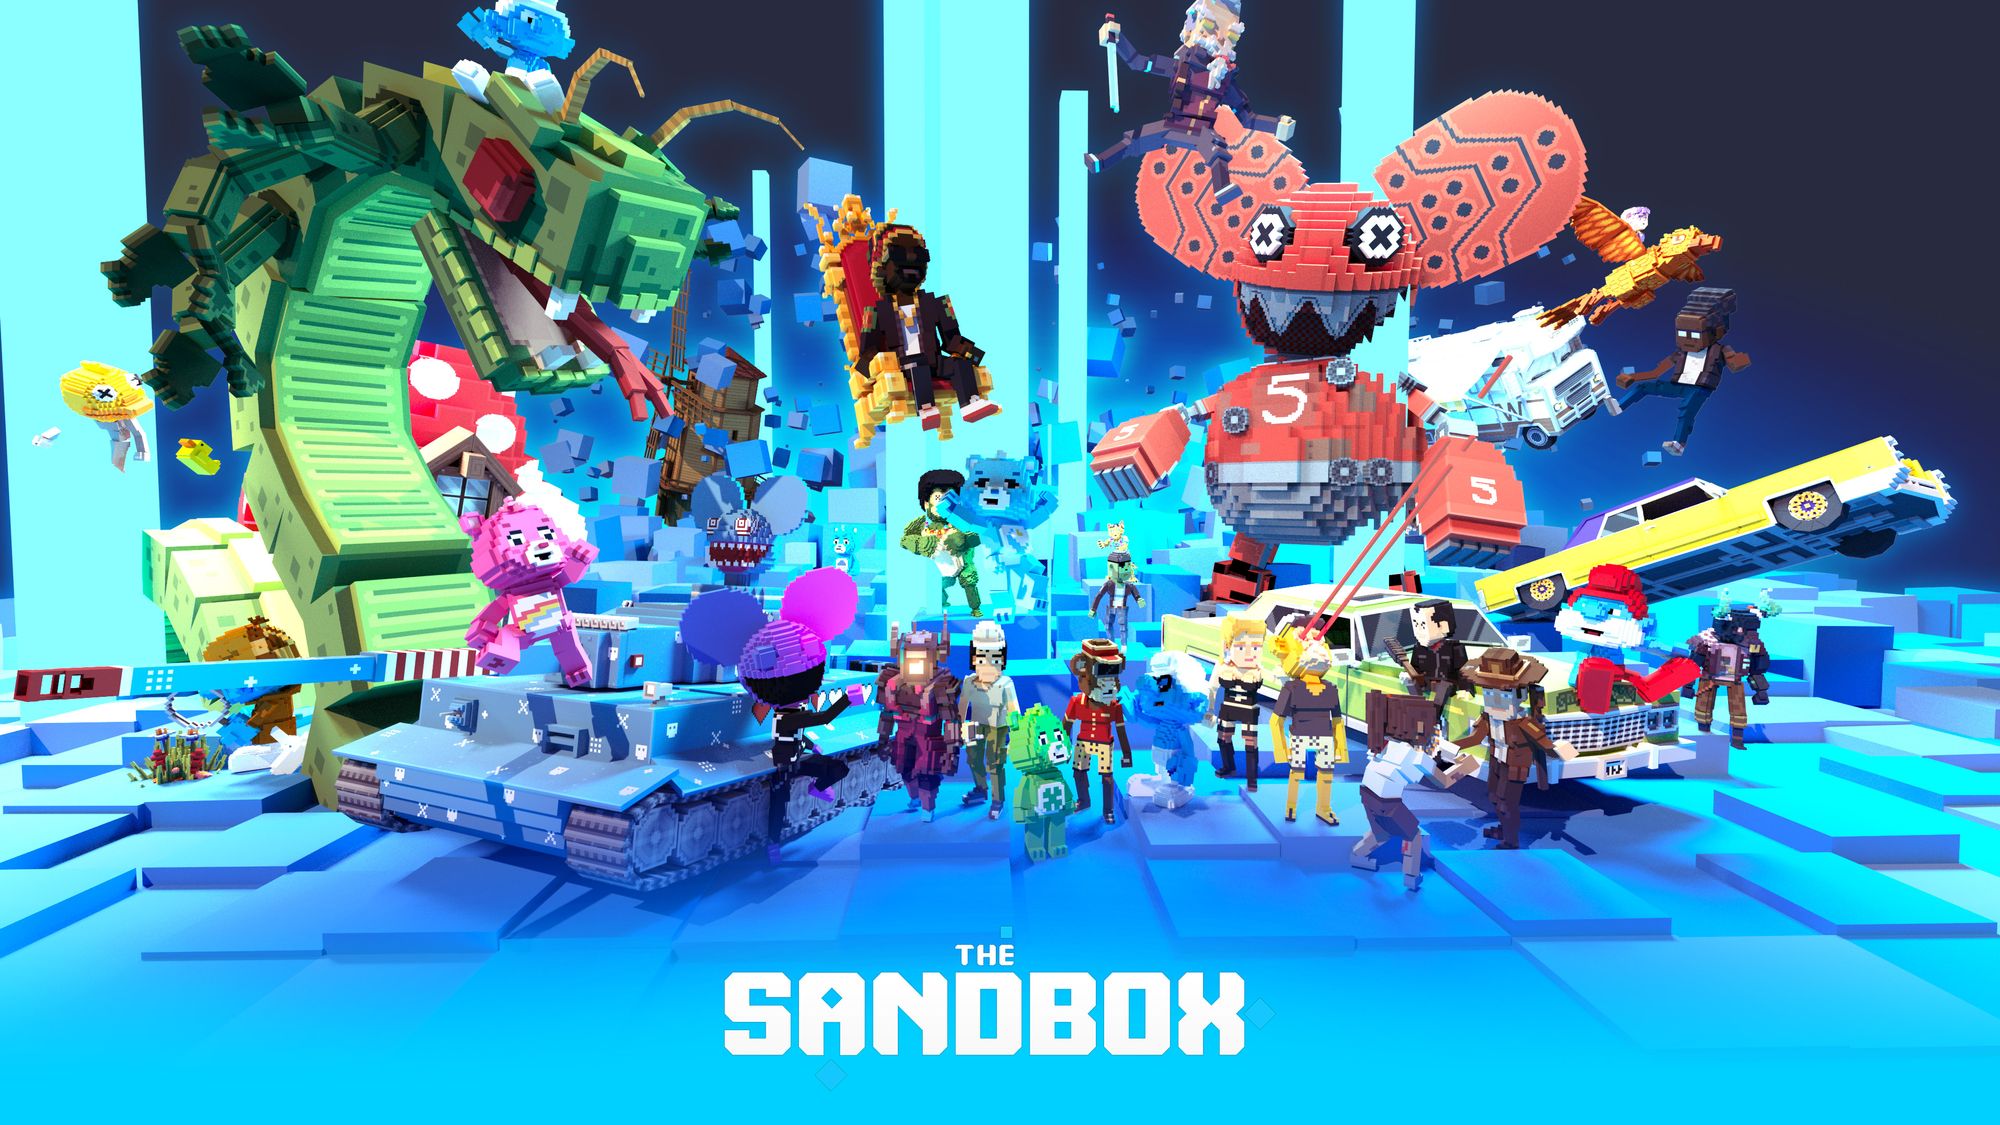 7 Best Games Like Roblox: Top Sandbox Games in 2023